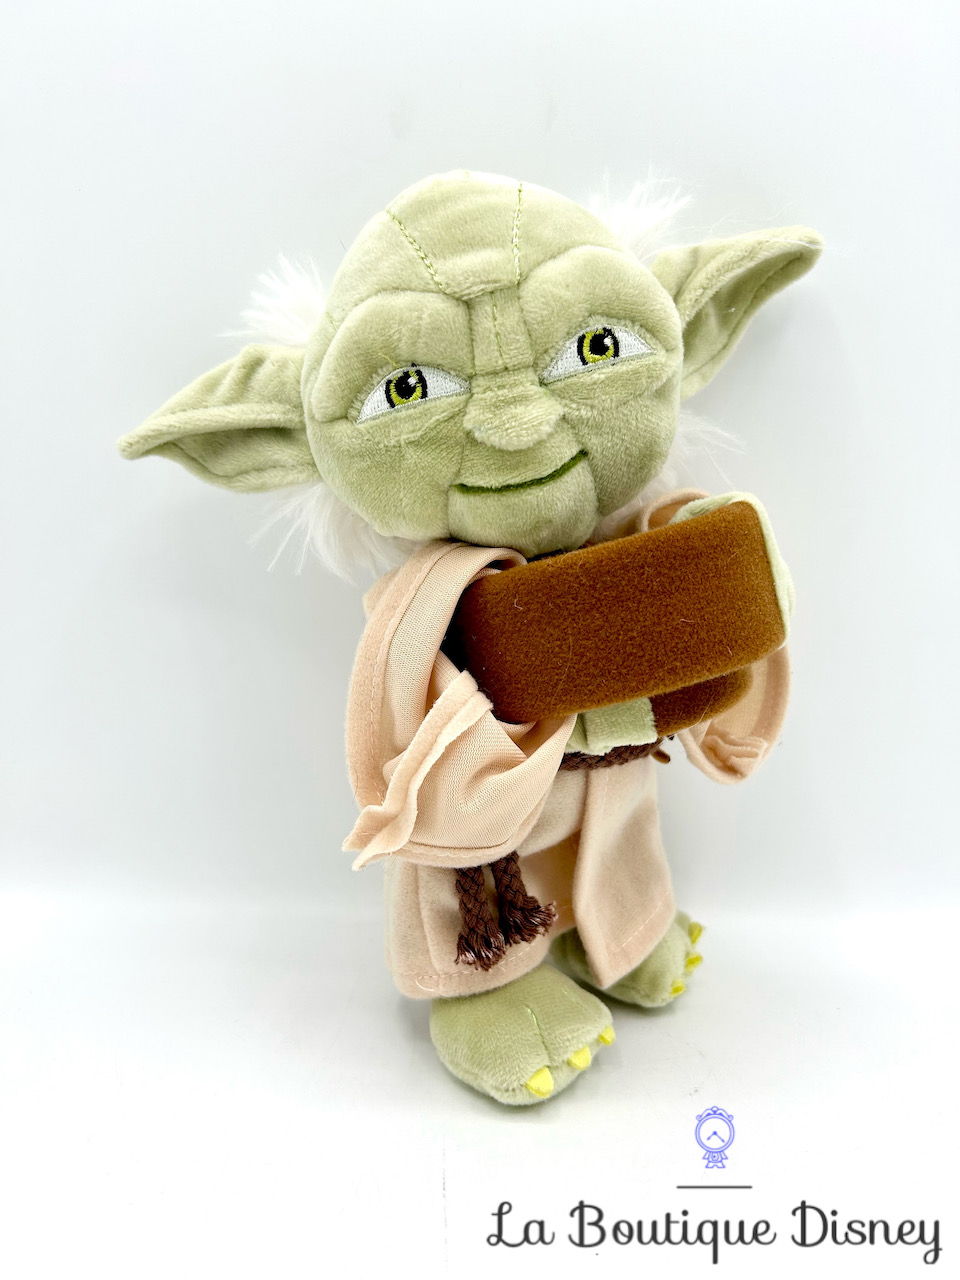 Peluche bracelet Yoda Jedi Star Wars DisneyParks 2018 Disneyland à enrouler poignet clap